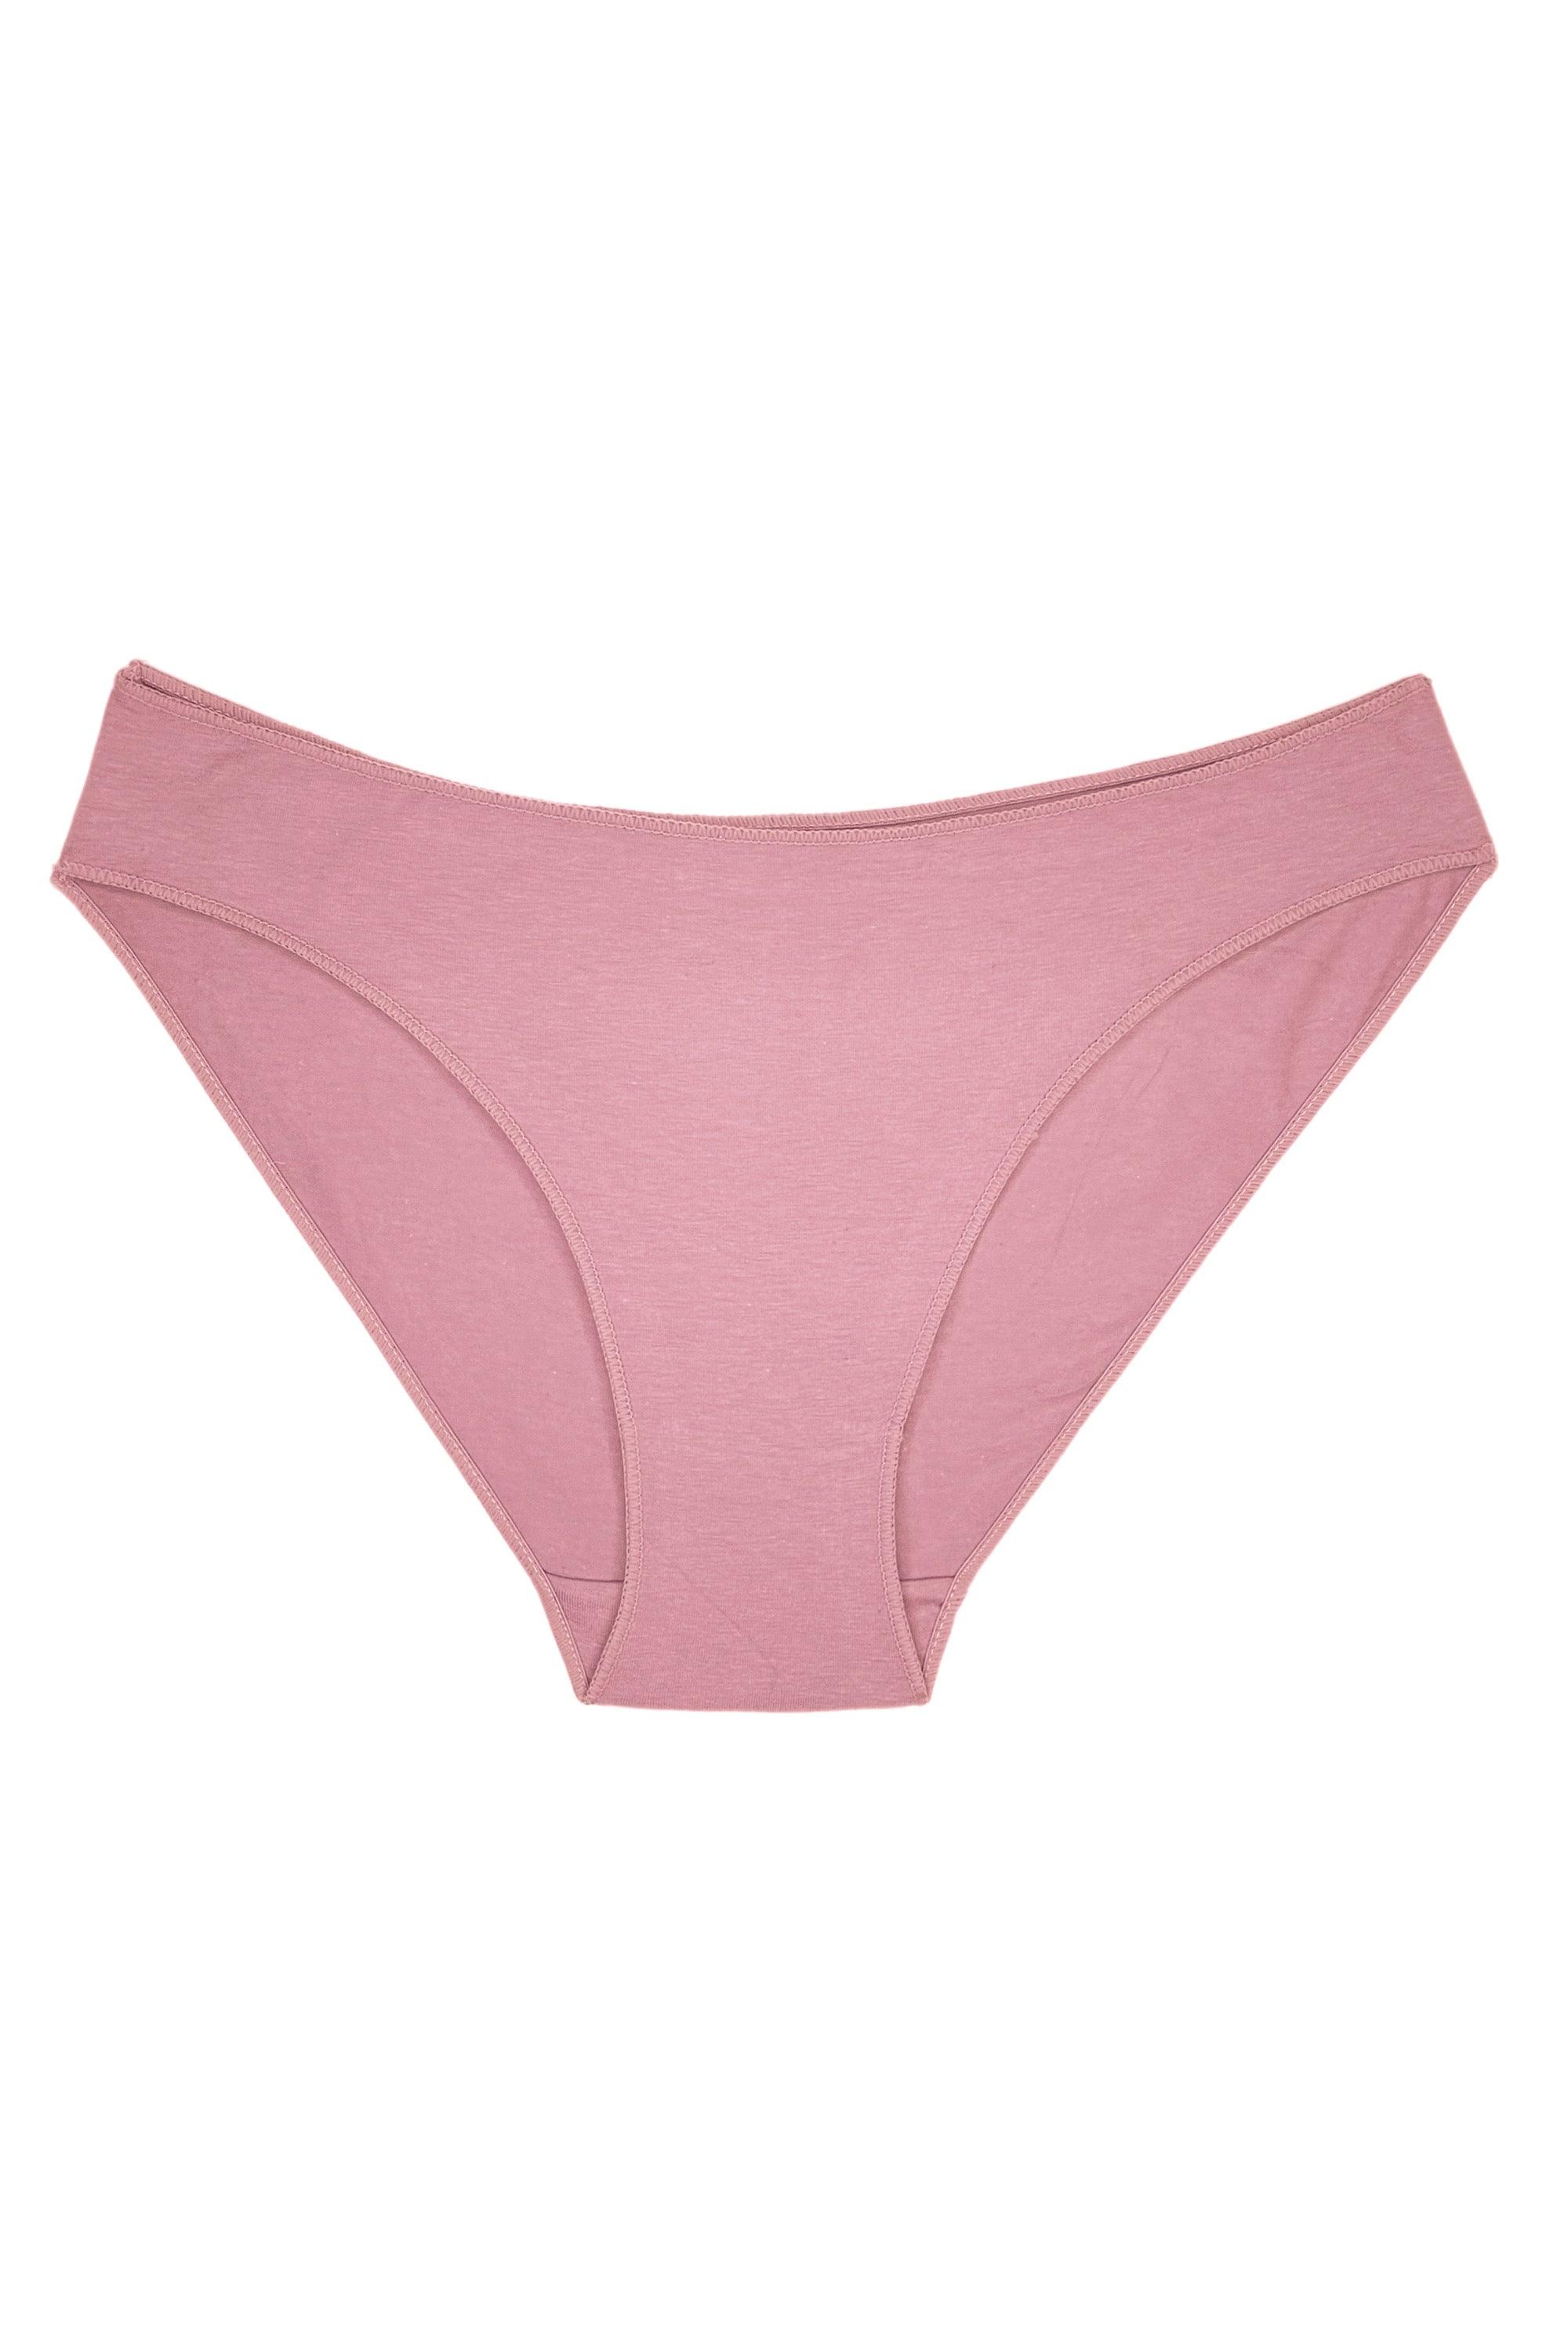 Comfort cotton blush slip panties - yesUndress